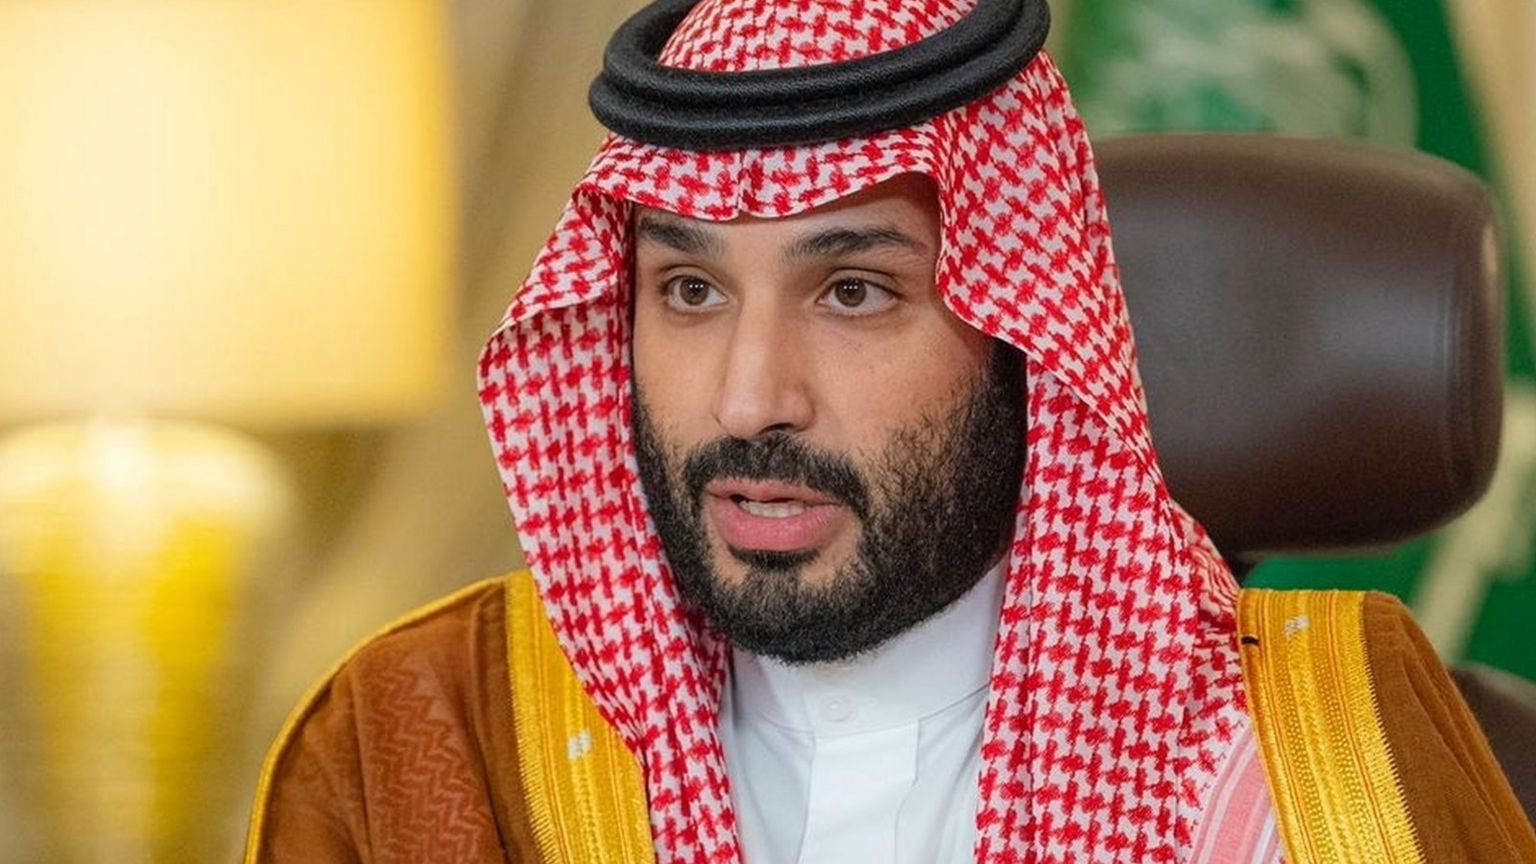 Абдалле аль сауду. Мухаммед Бин Салман. Принц Салман Саудовская Аравия. Принц Саудовской Аравии Мухаммед ибн Салман. Мухаммед ибн Салман в Саудовской Аравии.